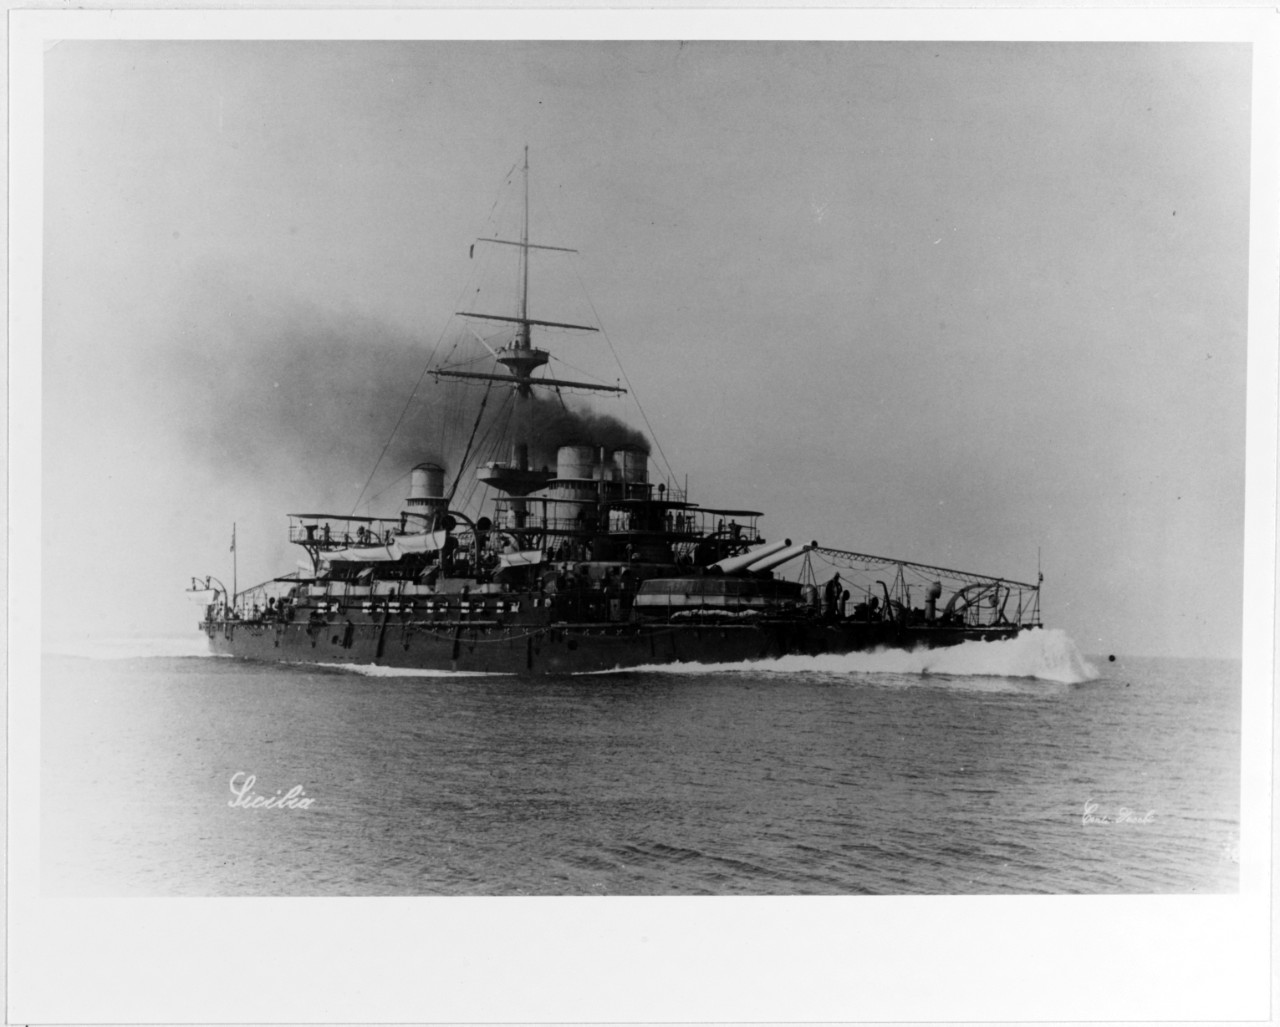 SICILIA (Italian Battleship, 1891-1923) 